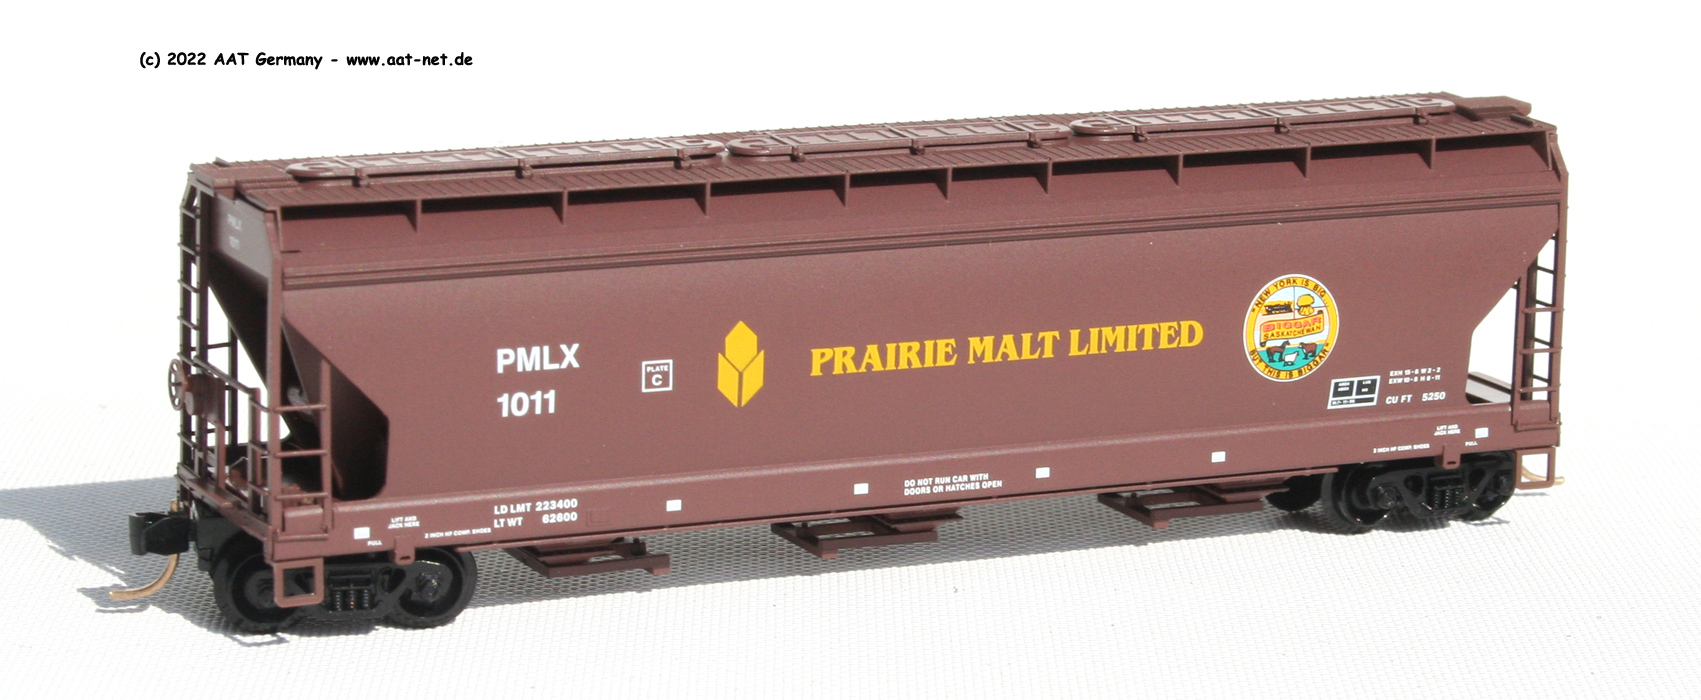 PMLX / Prairie Malt Limited